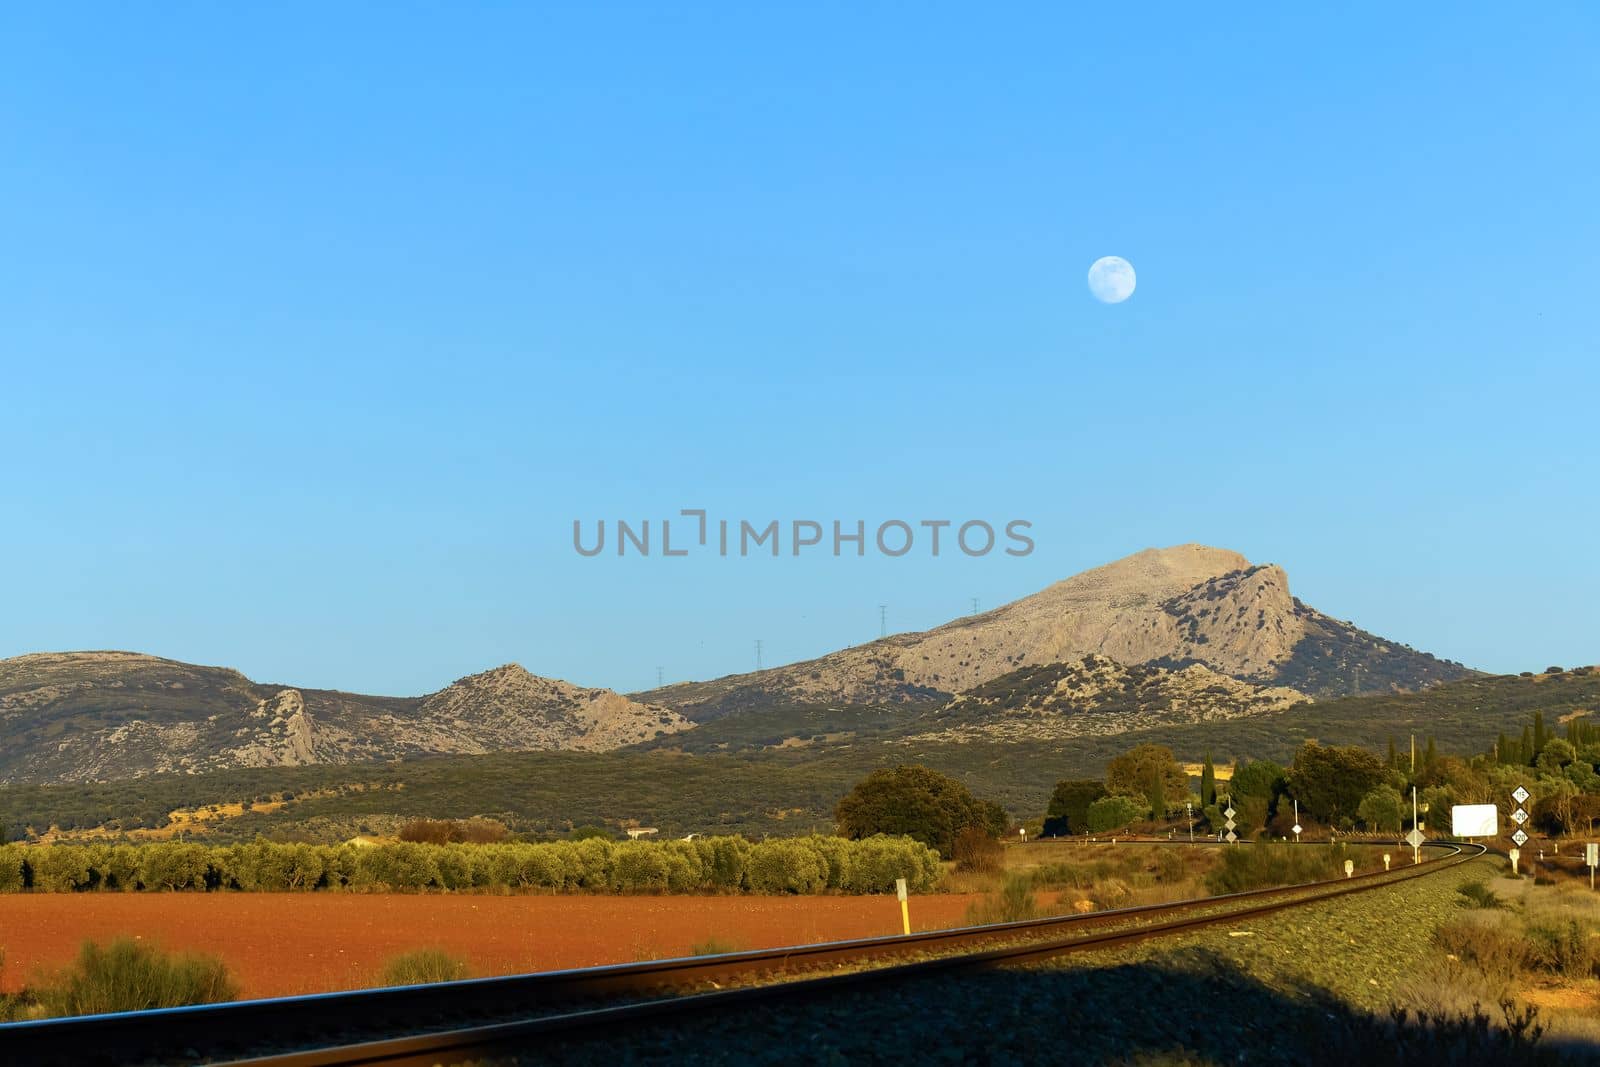 mountain scenery with train track and full moon by joseantona